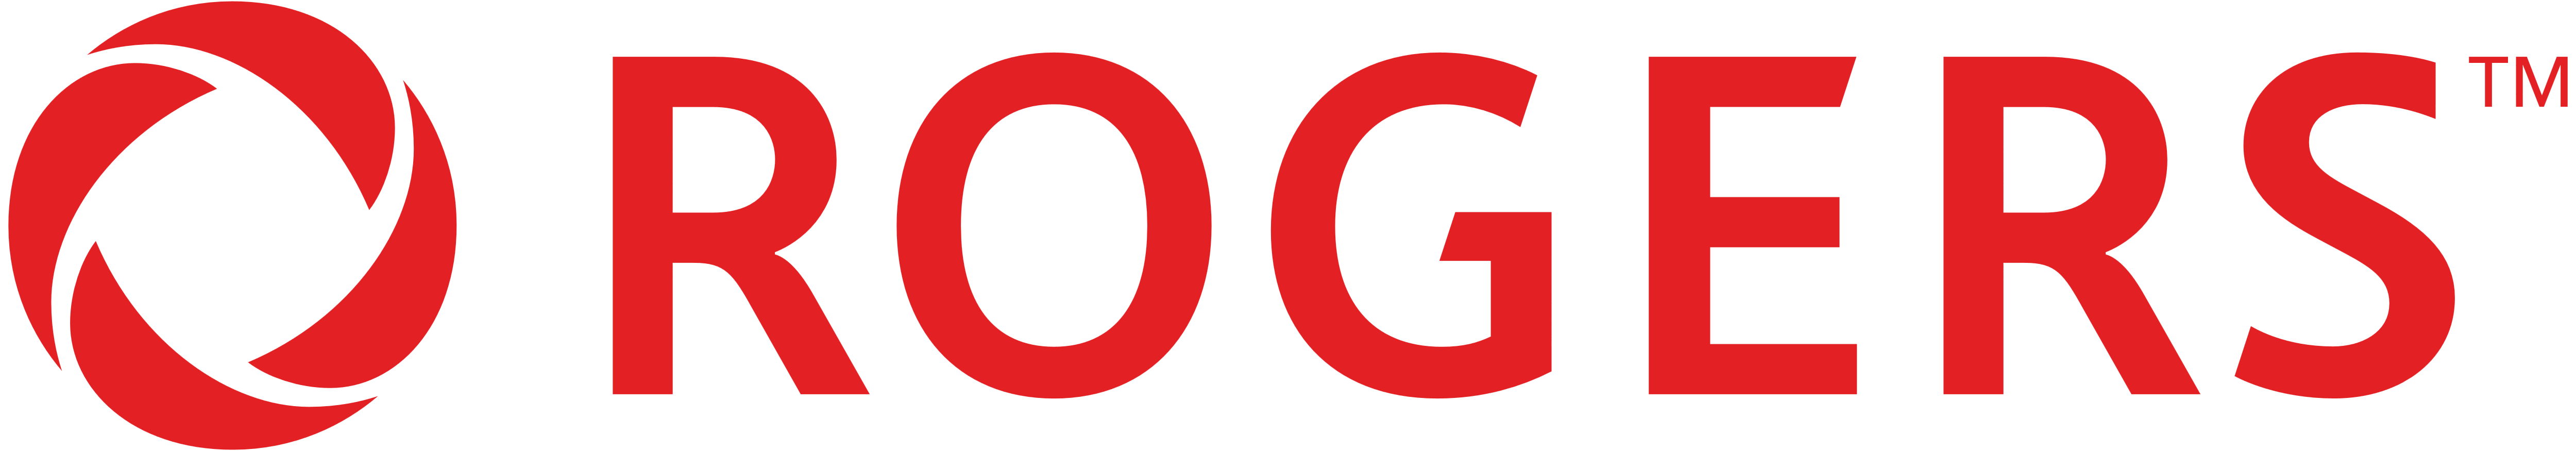 Rogers – Logos Download